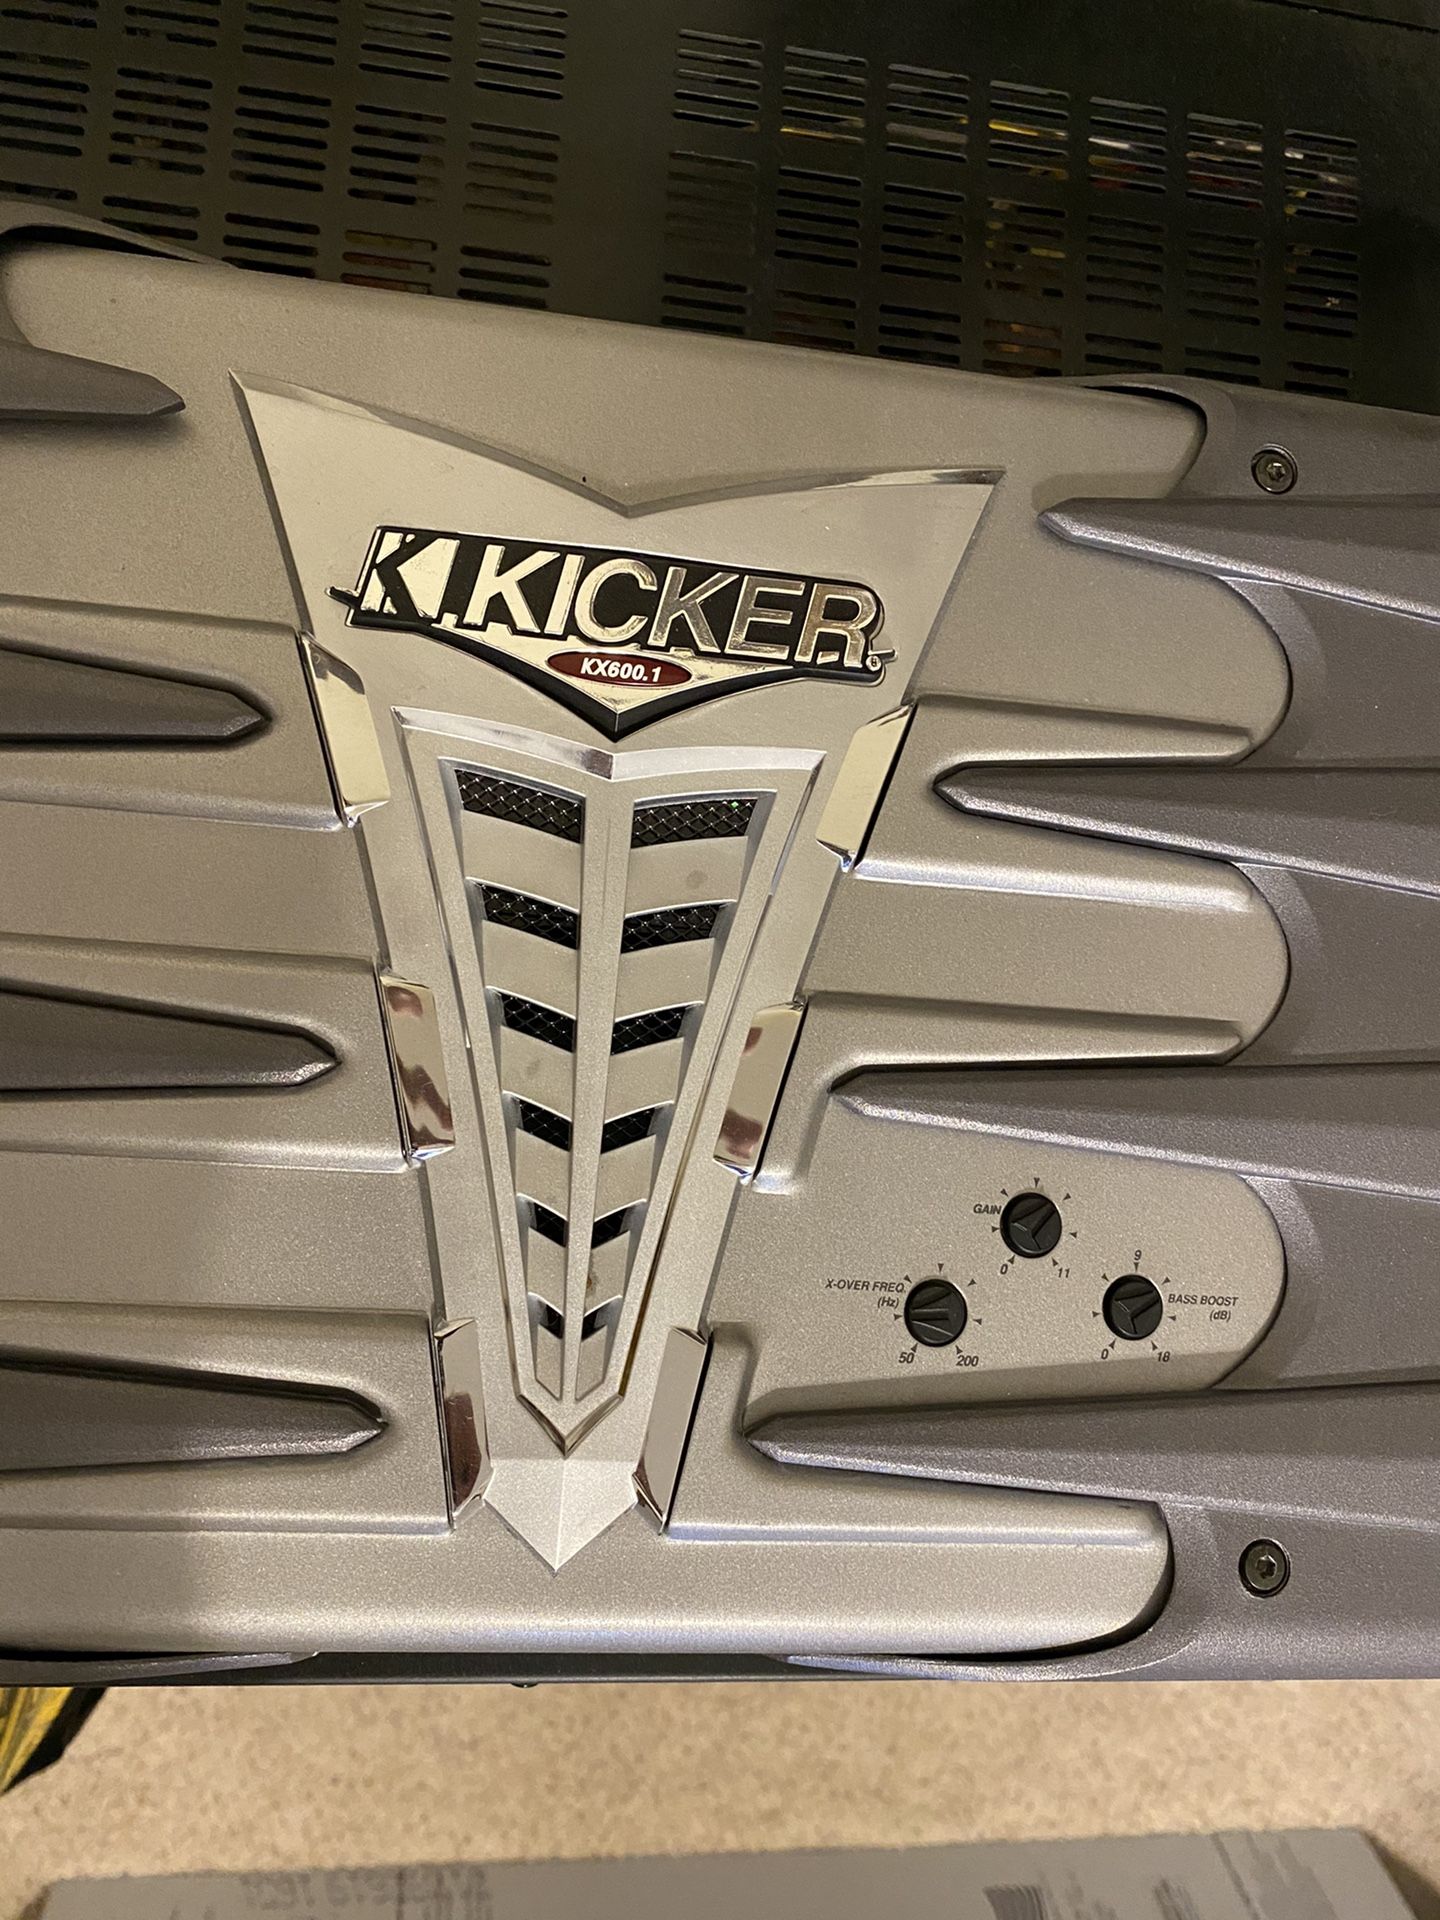 Kicker High power car mono amplifier - KX.600.1 - like new amp